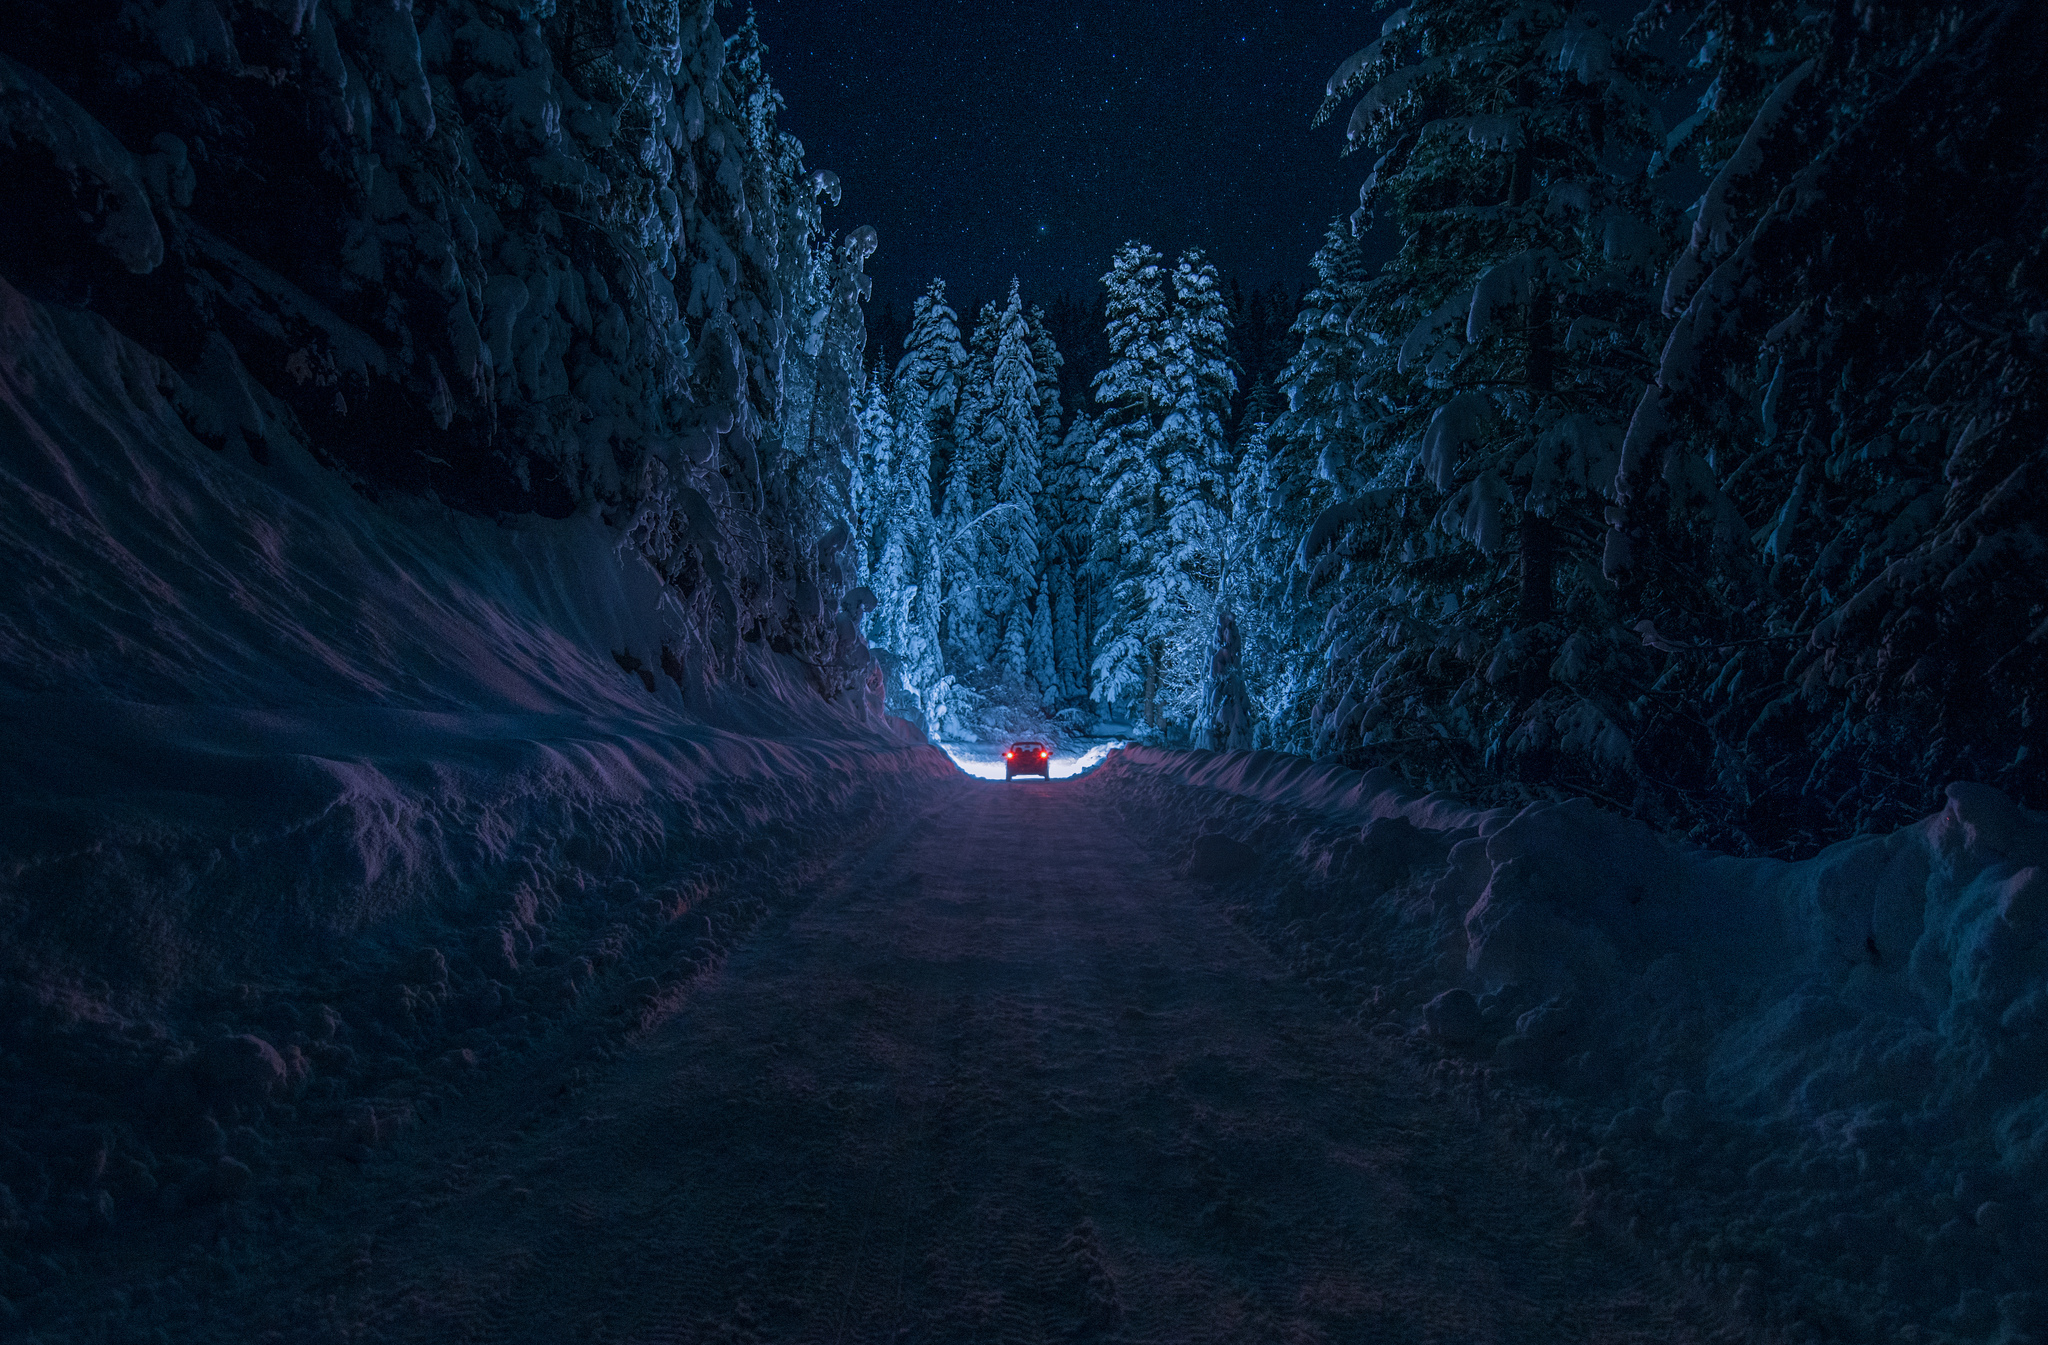 Bulgaria Kyustendil winter road snow forest night car light sky stars trees wallpaperx1345